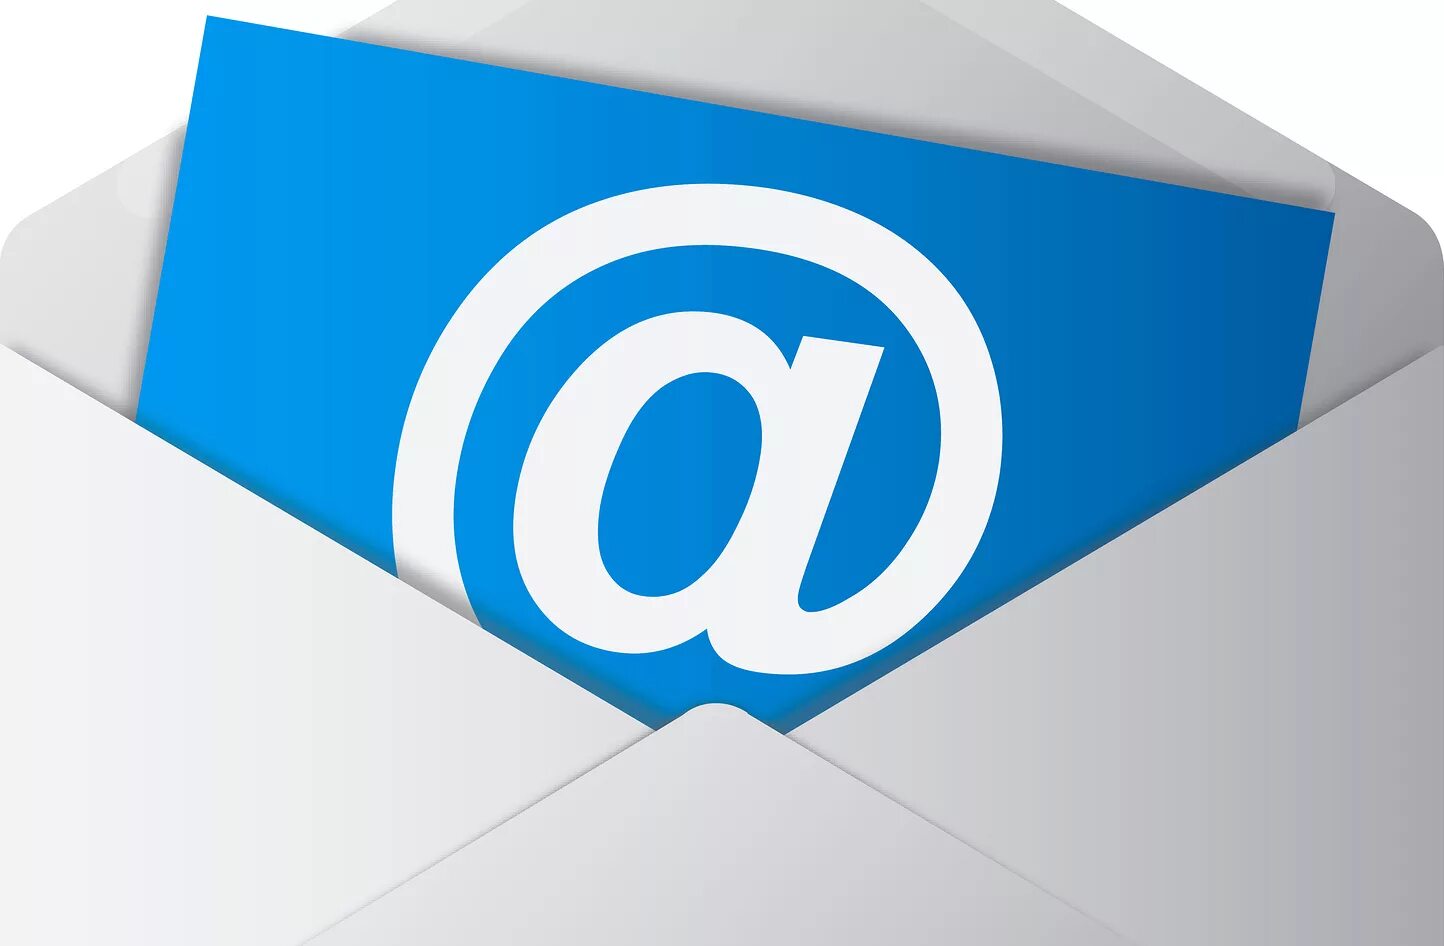 Non mail. Электронная почта. Электронная почта (e-mail). Email фото. Логотип электронной почты.